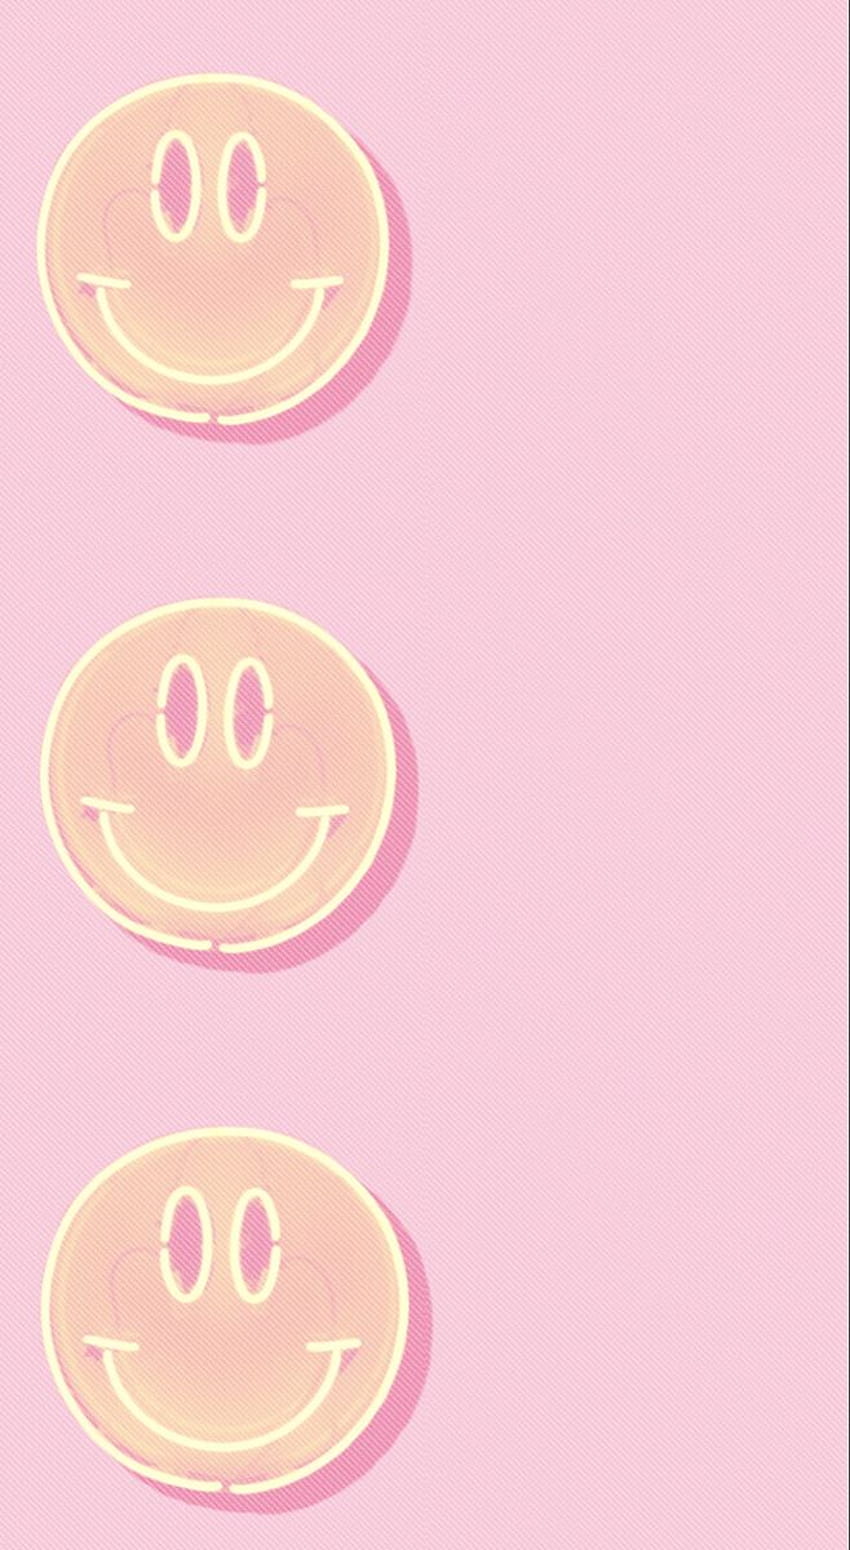 Aesthetic Smile Emoji Wallpaper Download  MobCup